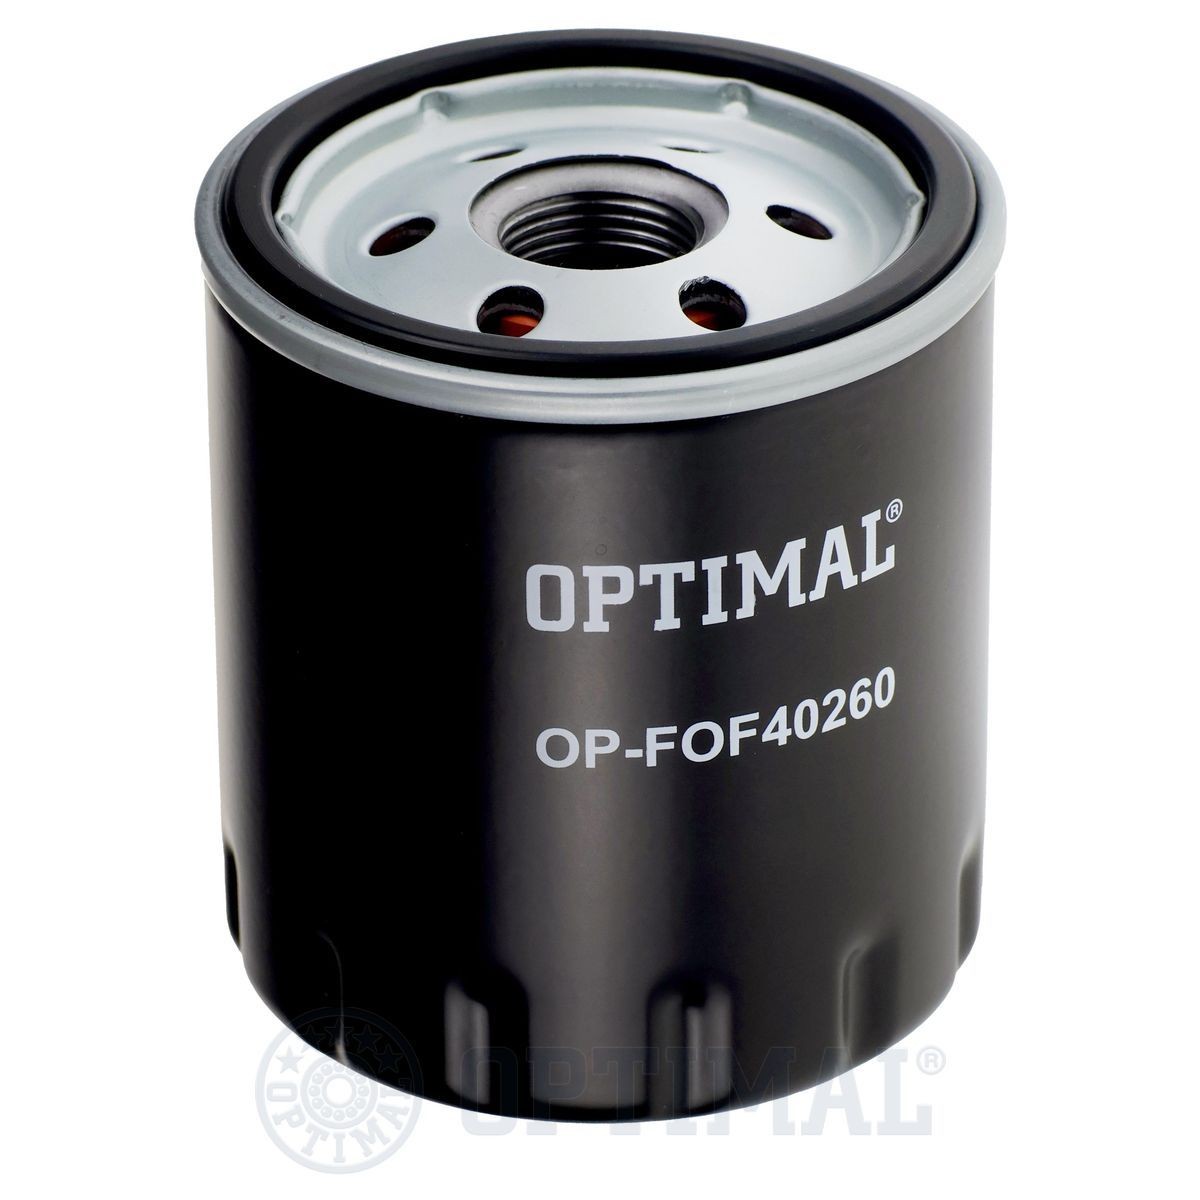 OPTIMAL OP-FOF40260 Oil filter 55242 758